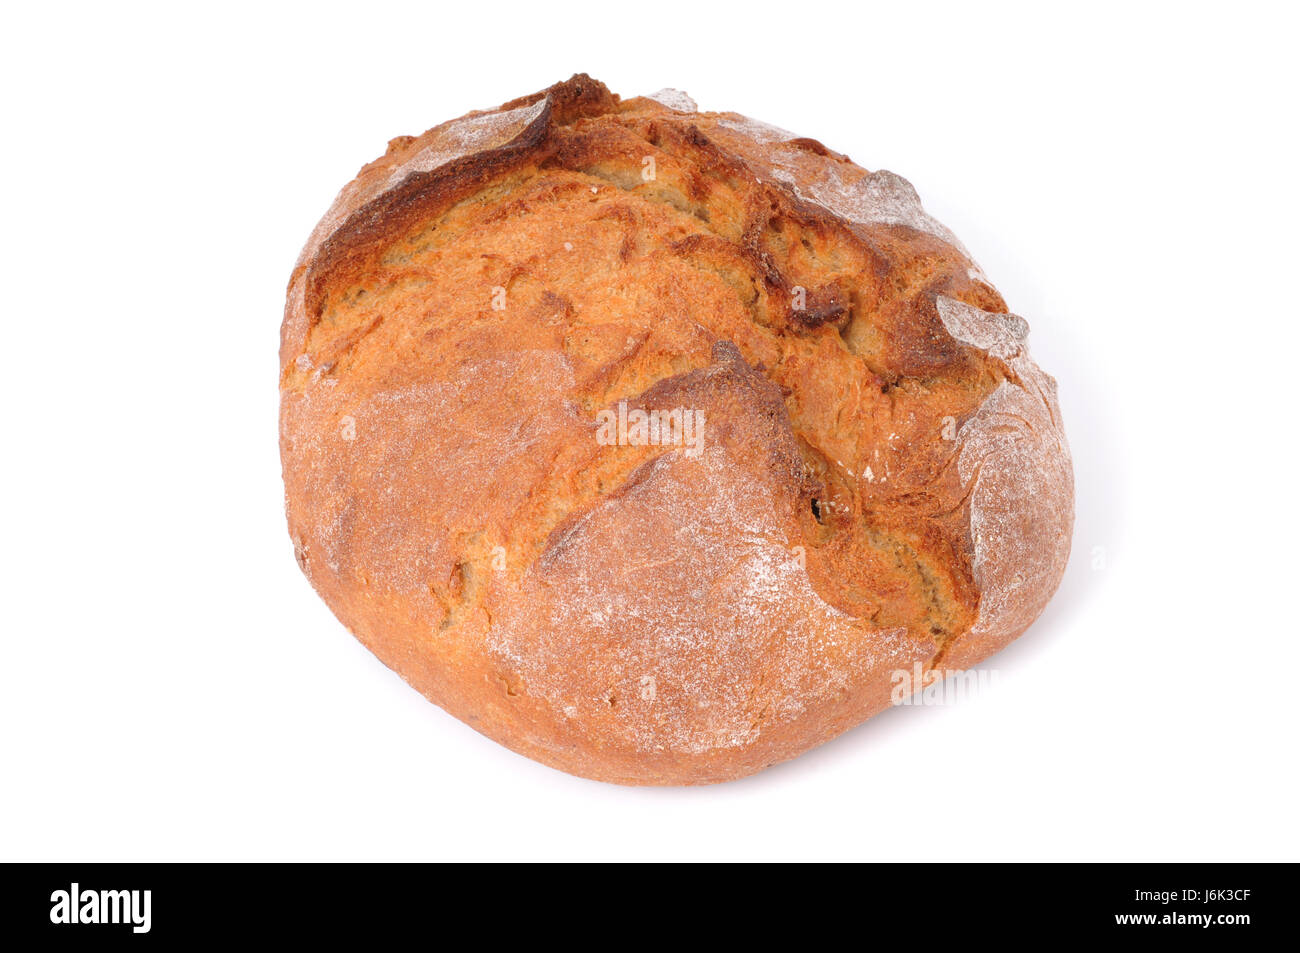 wheat beer bread Stock Photo